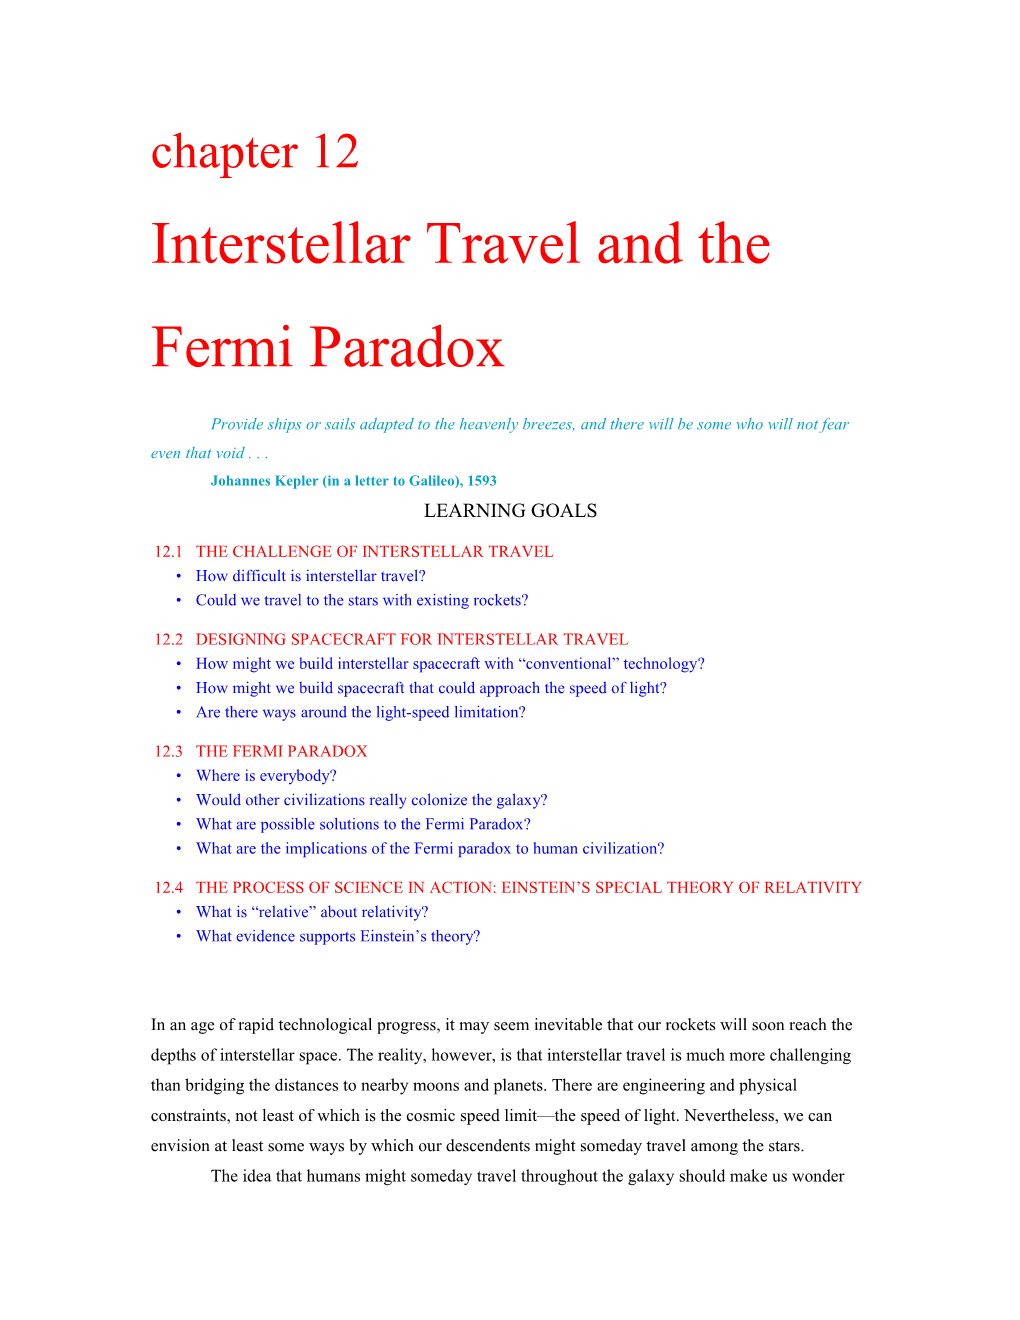 Interstellar Travel and the Fermi Paradox